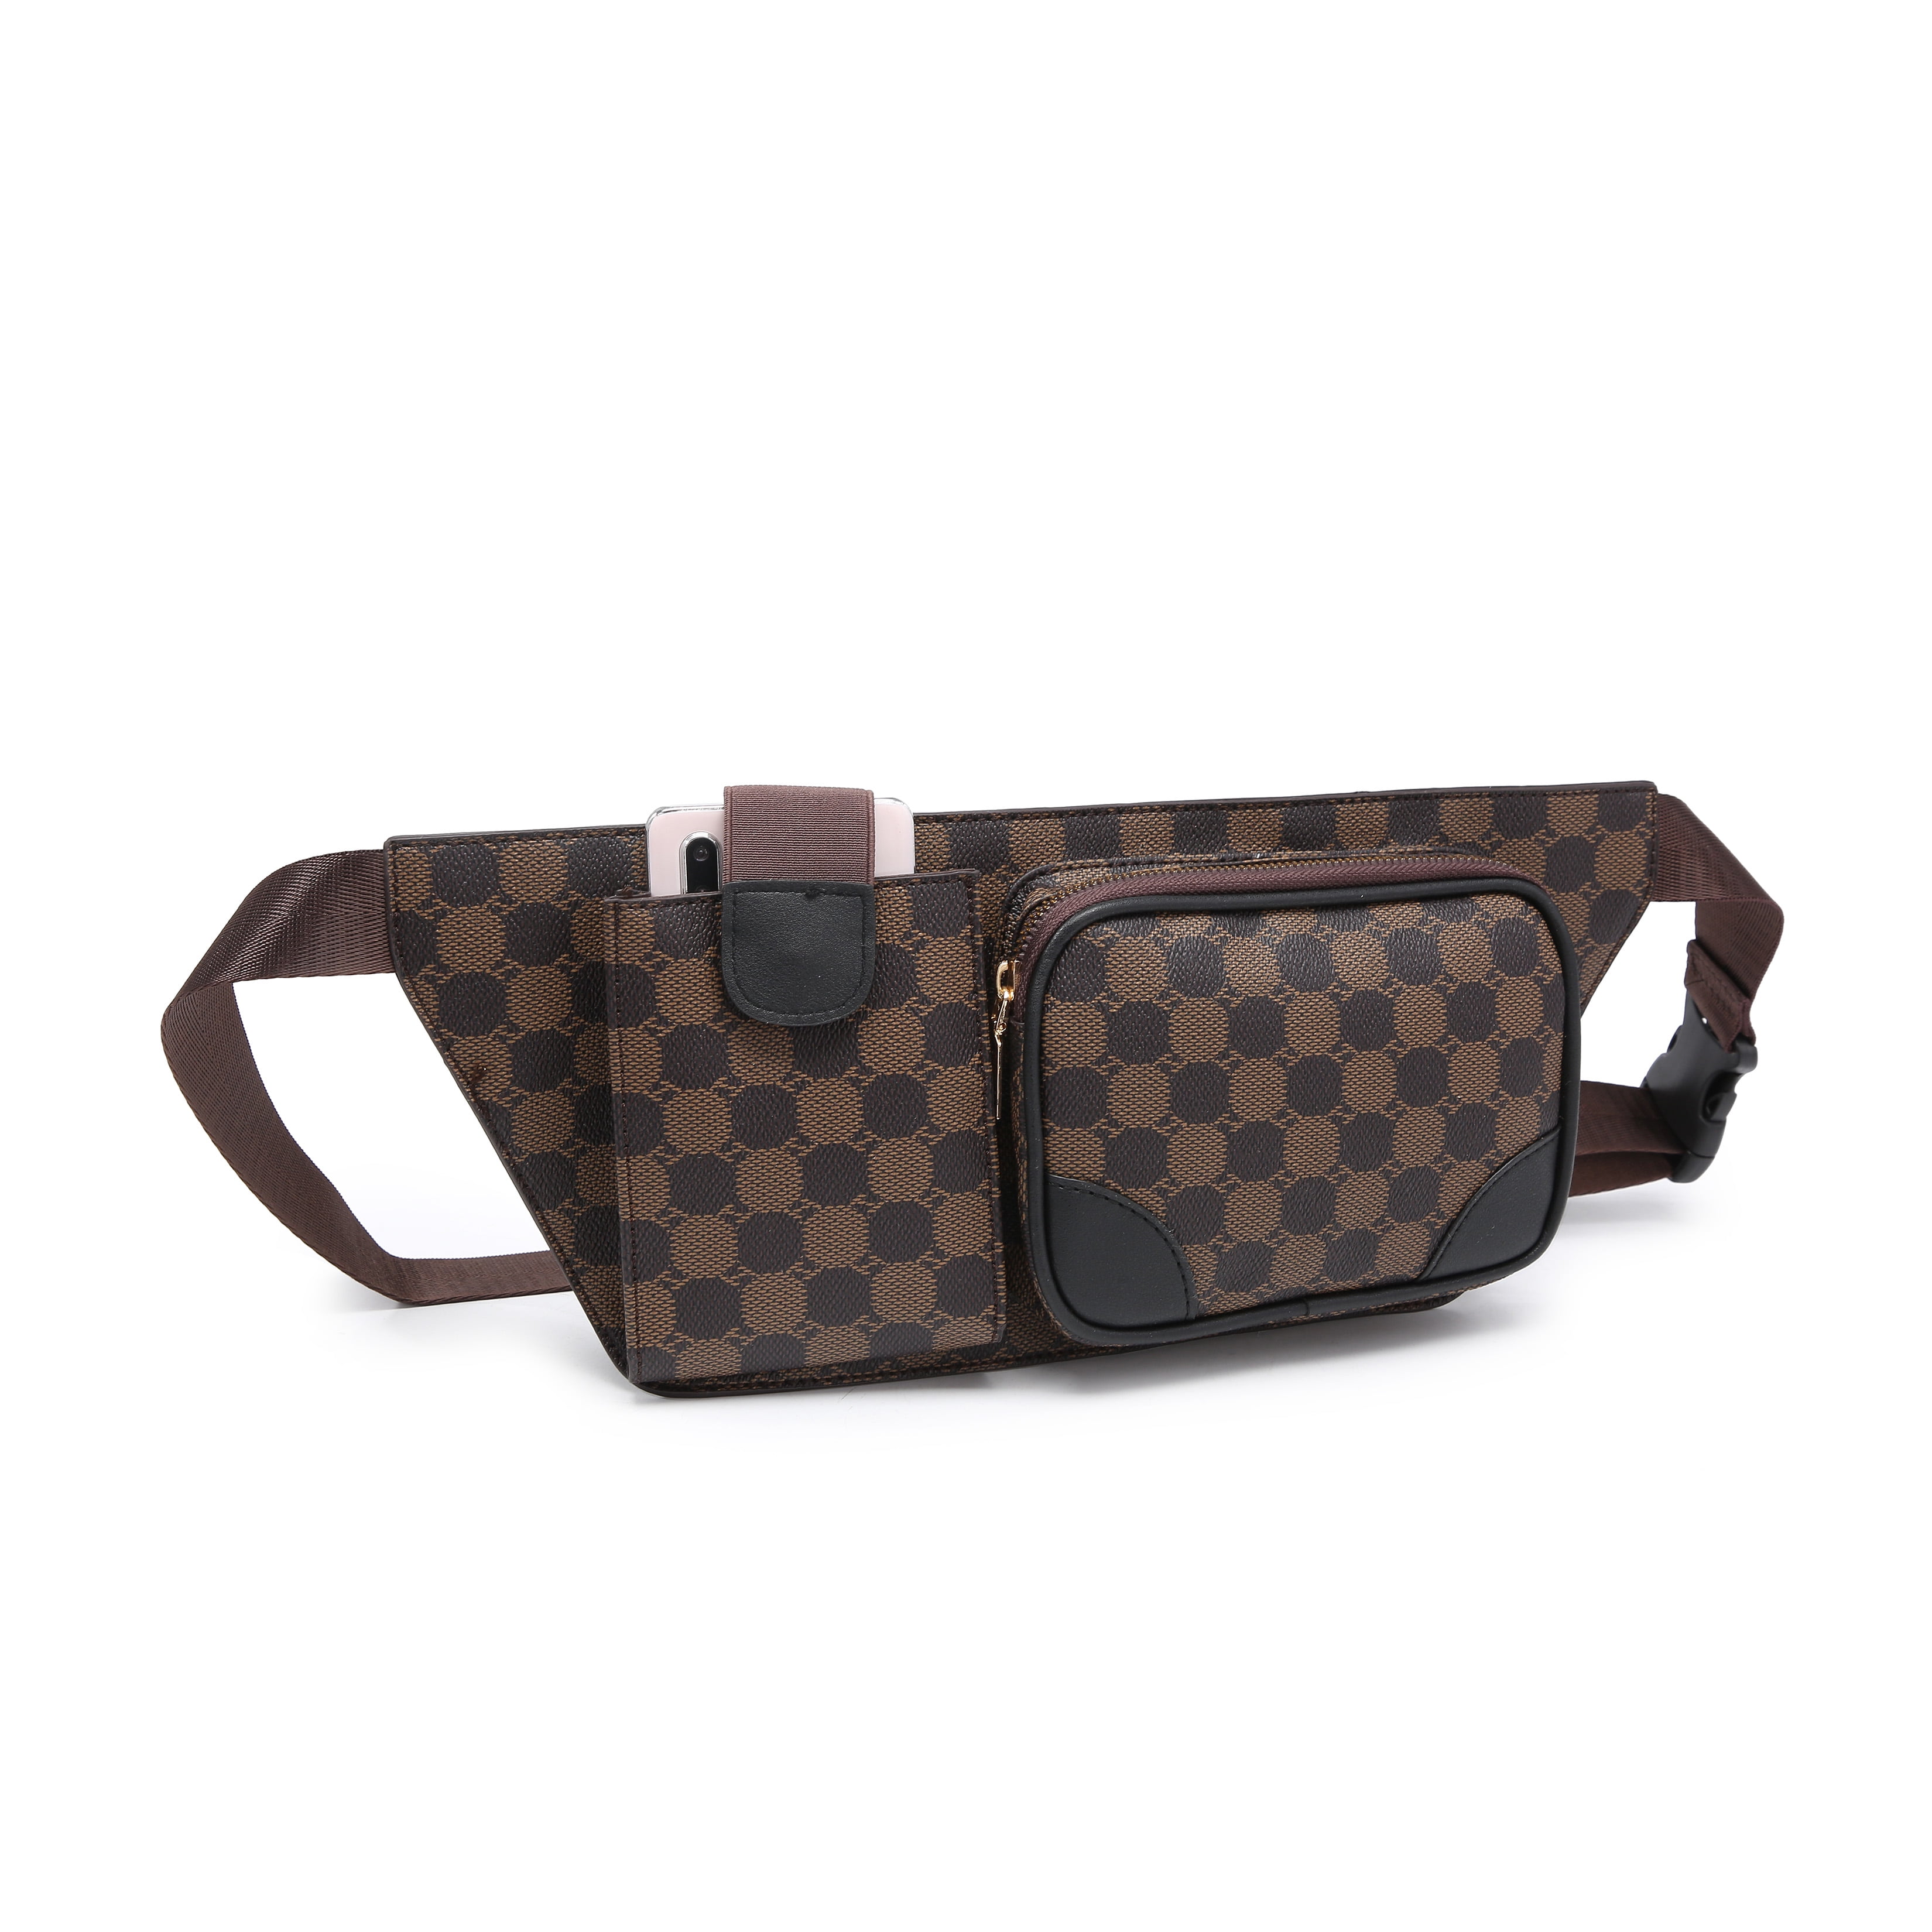 100% Genuine leather men waist bag sport fanny pack pouch purse sling backpack 